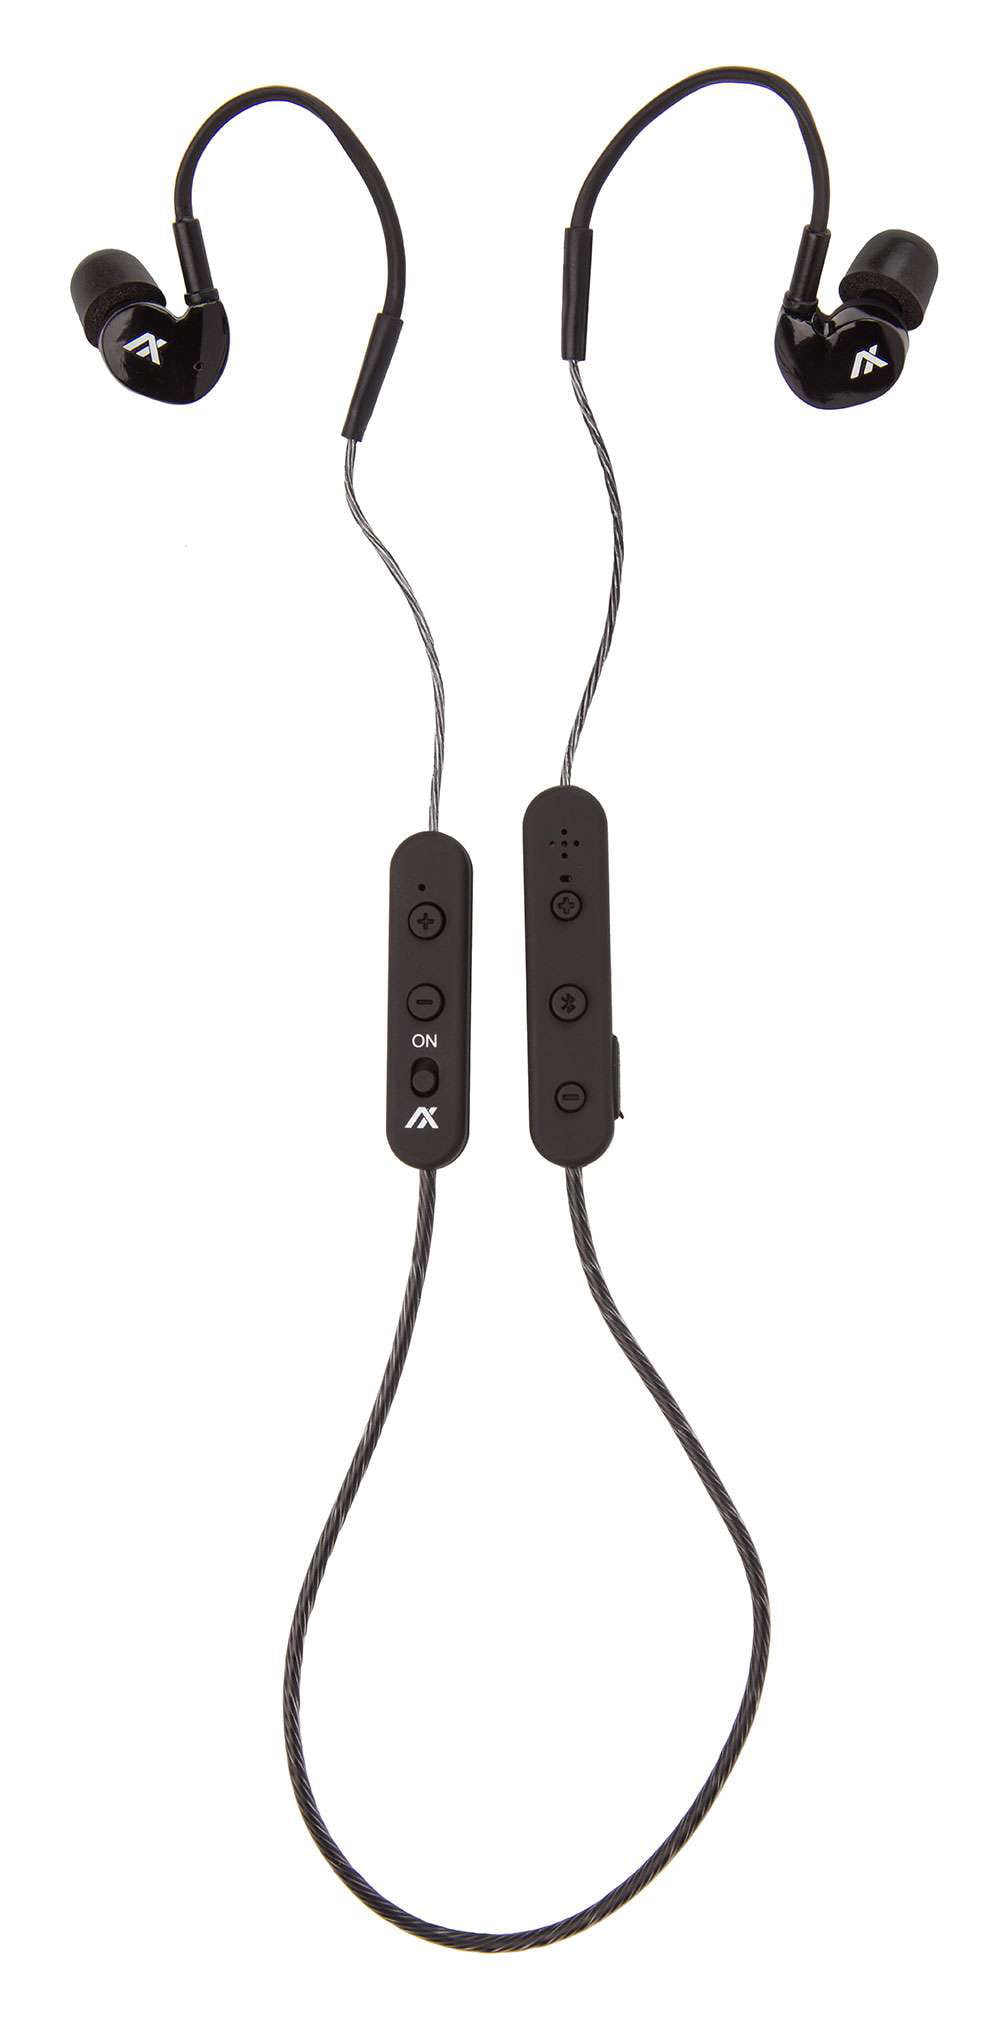 Axil Bluetooth Sports In-Ear Headphones, Black, GS-X